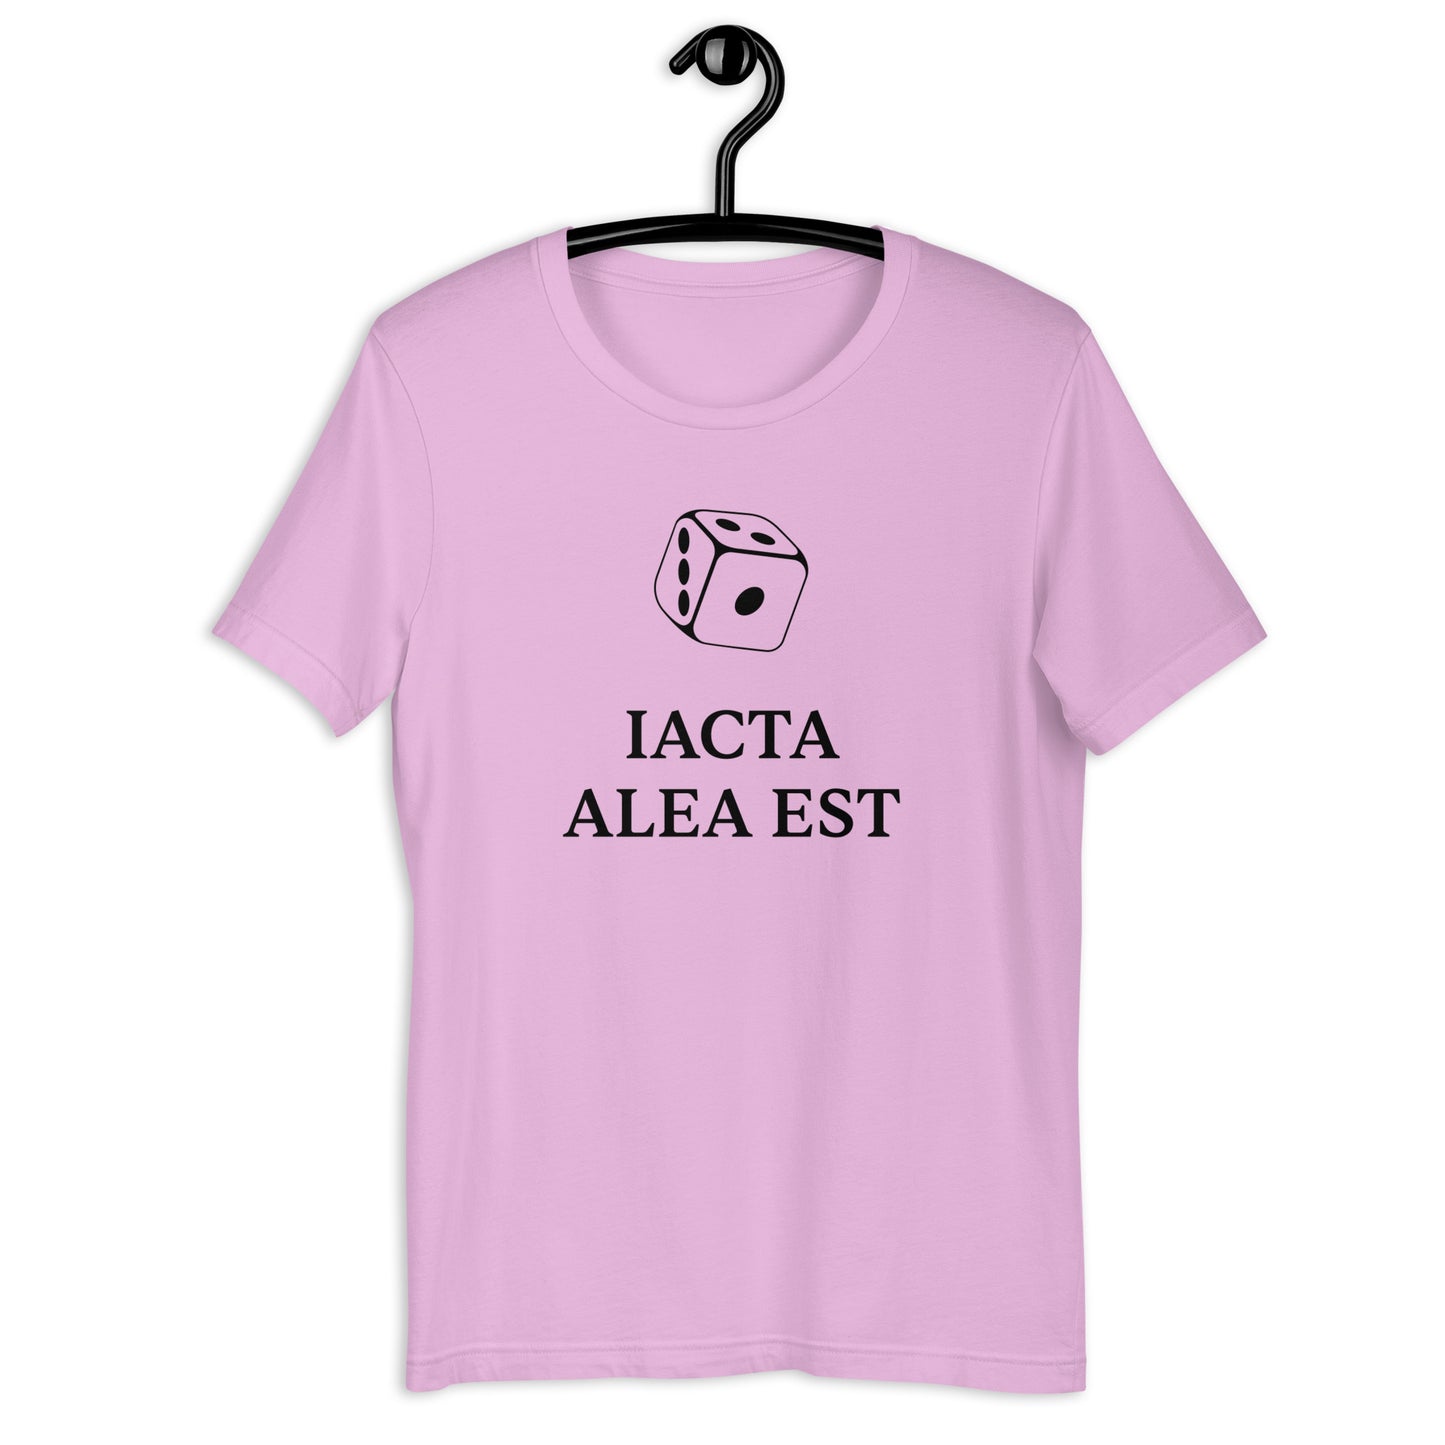 Iacta alea est, Unisex t-shirt